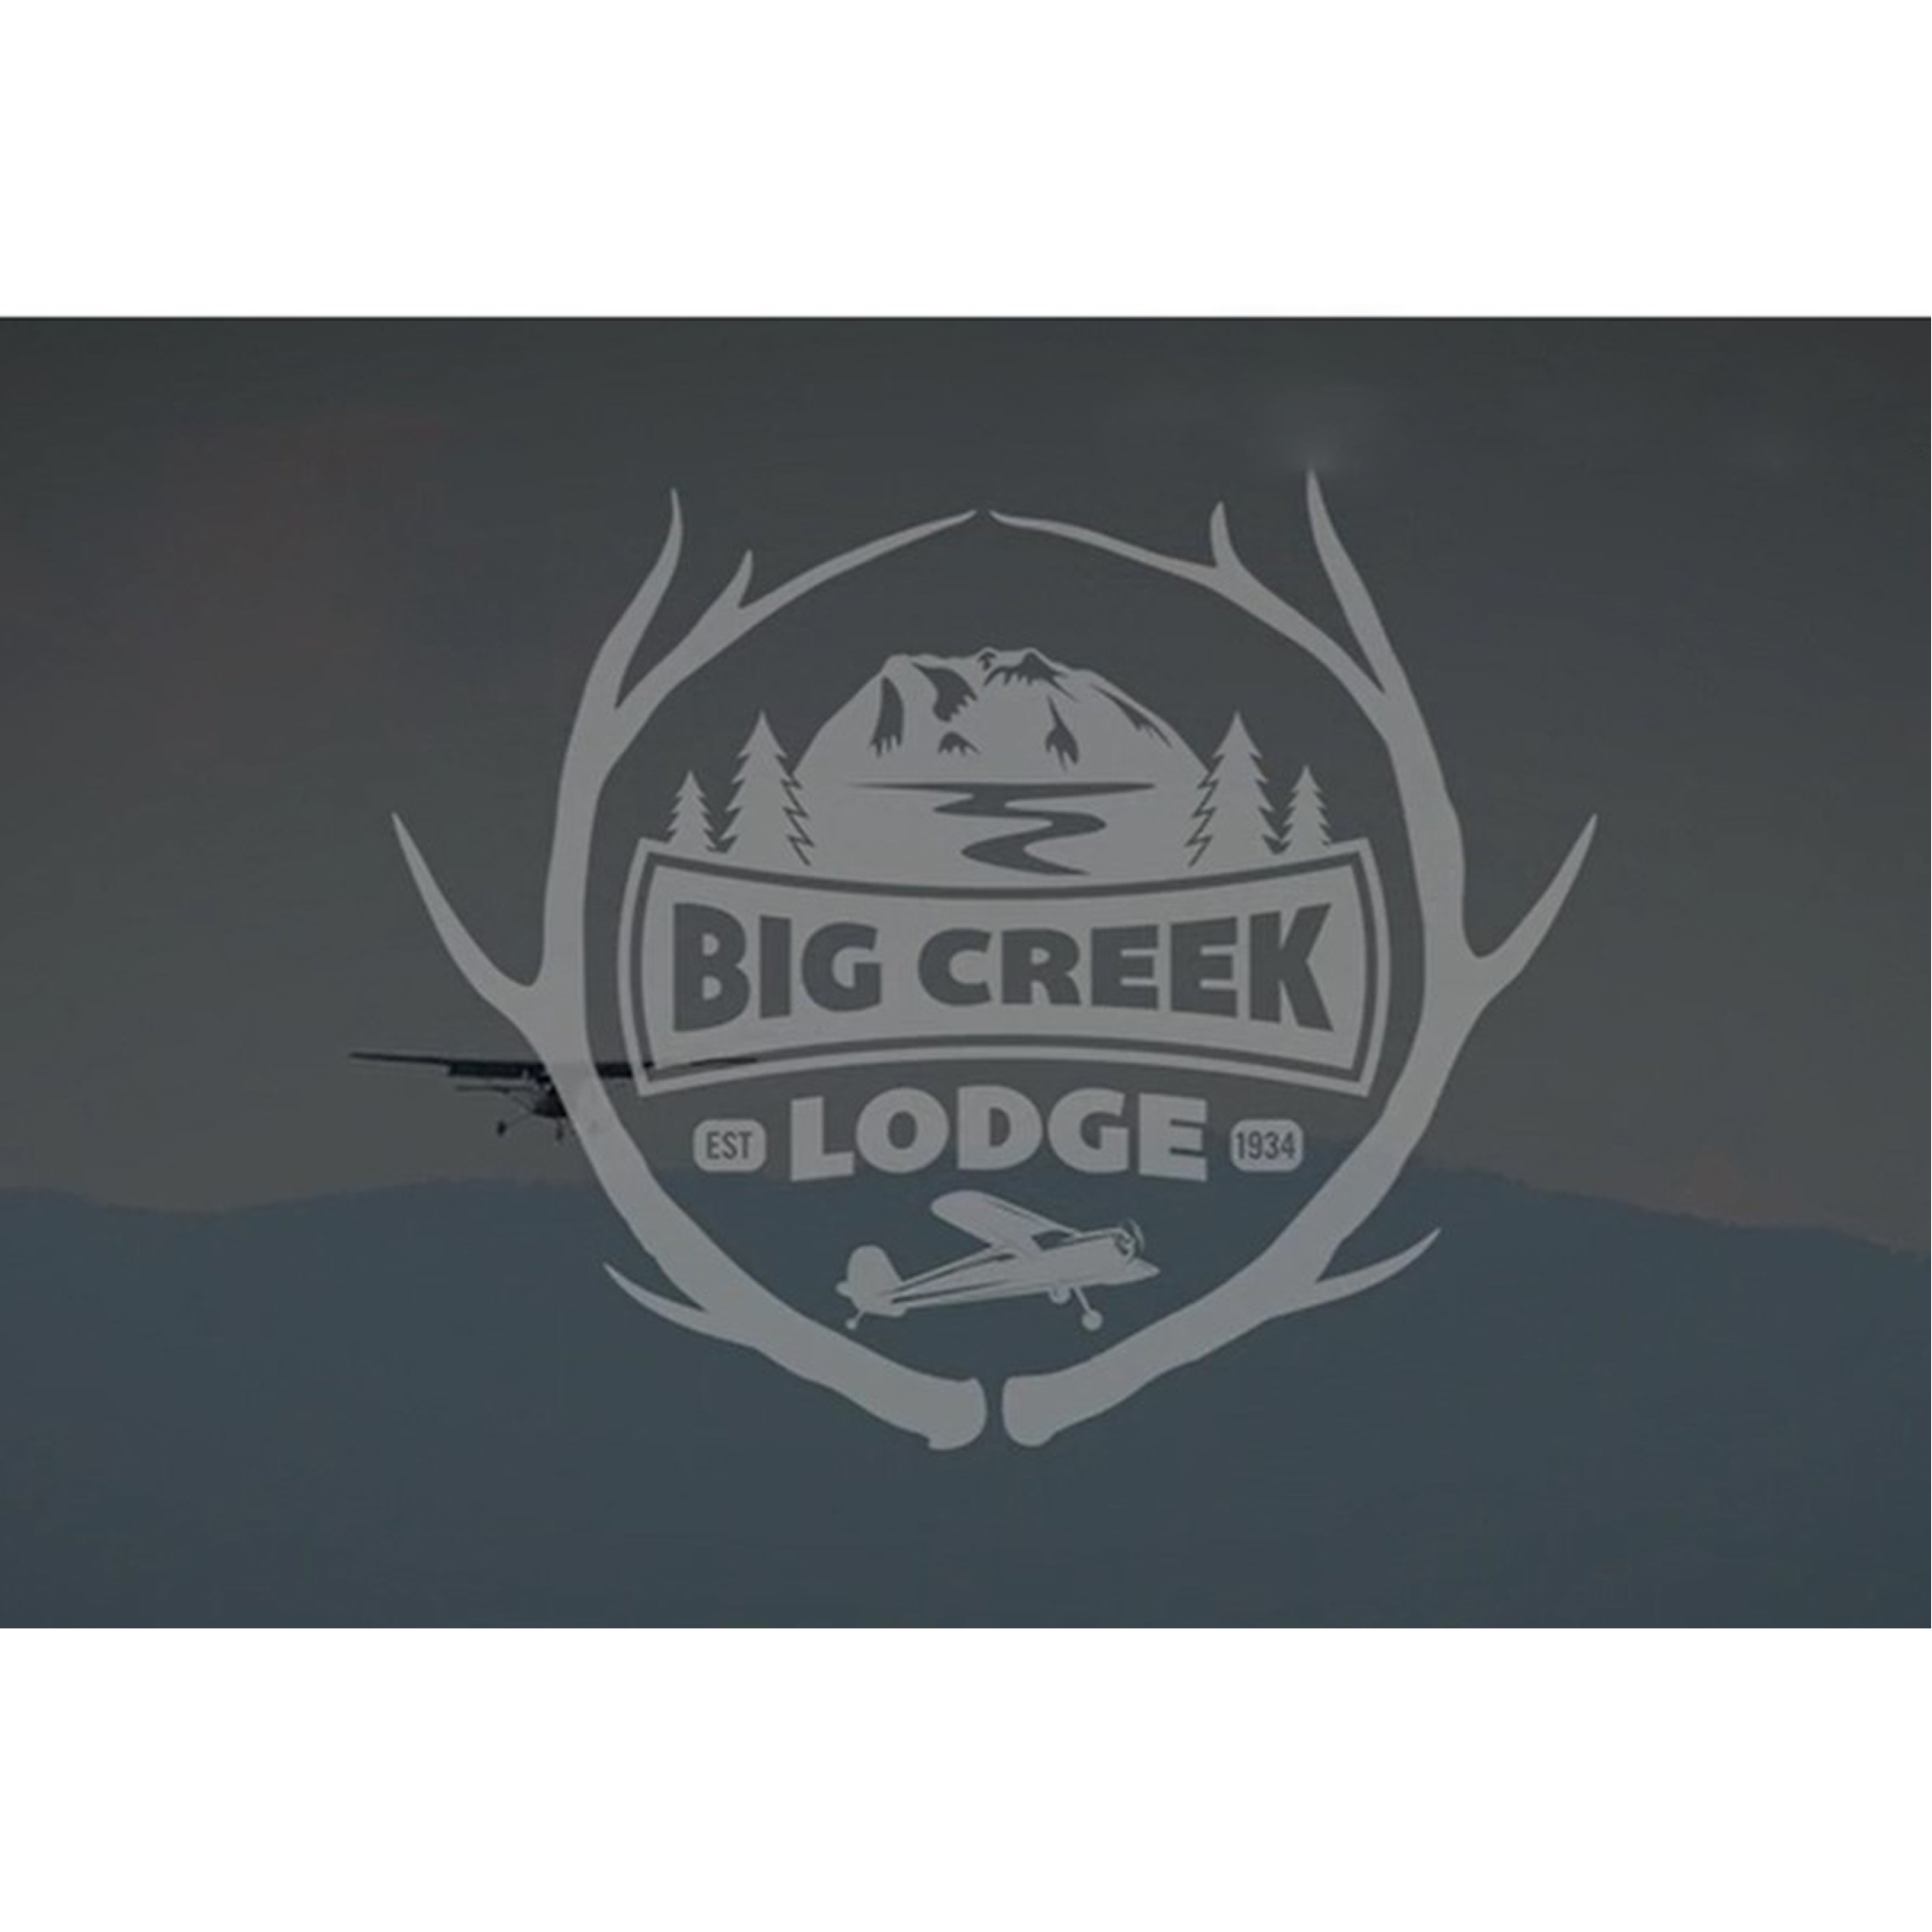 Big Creek Lodge